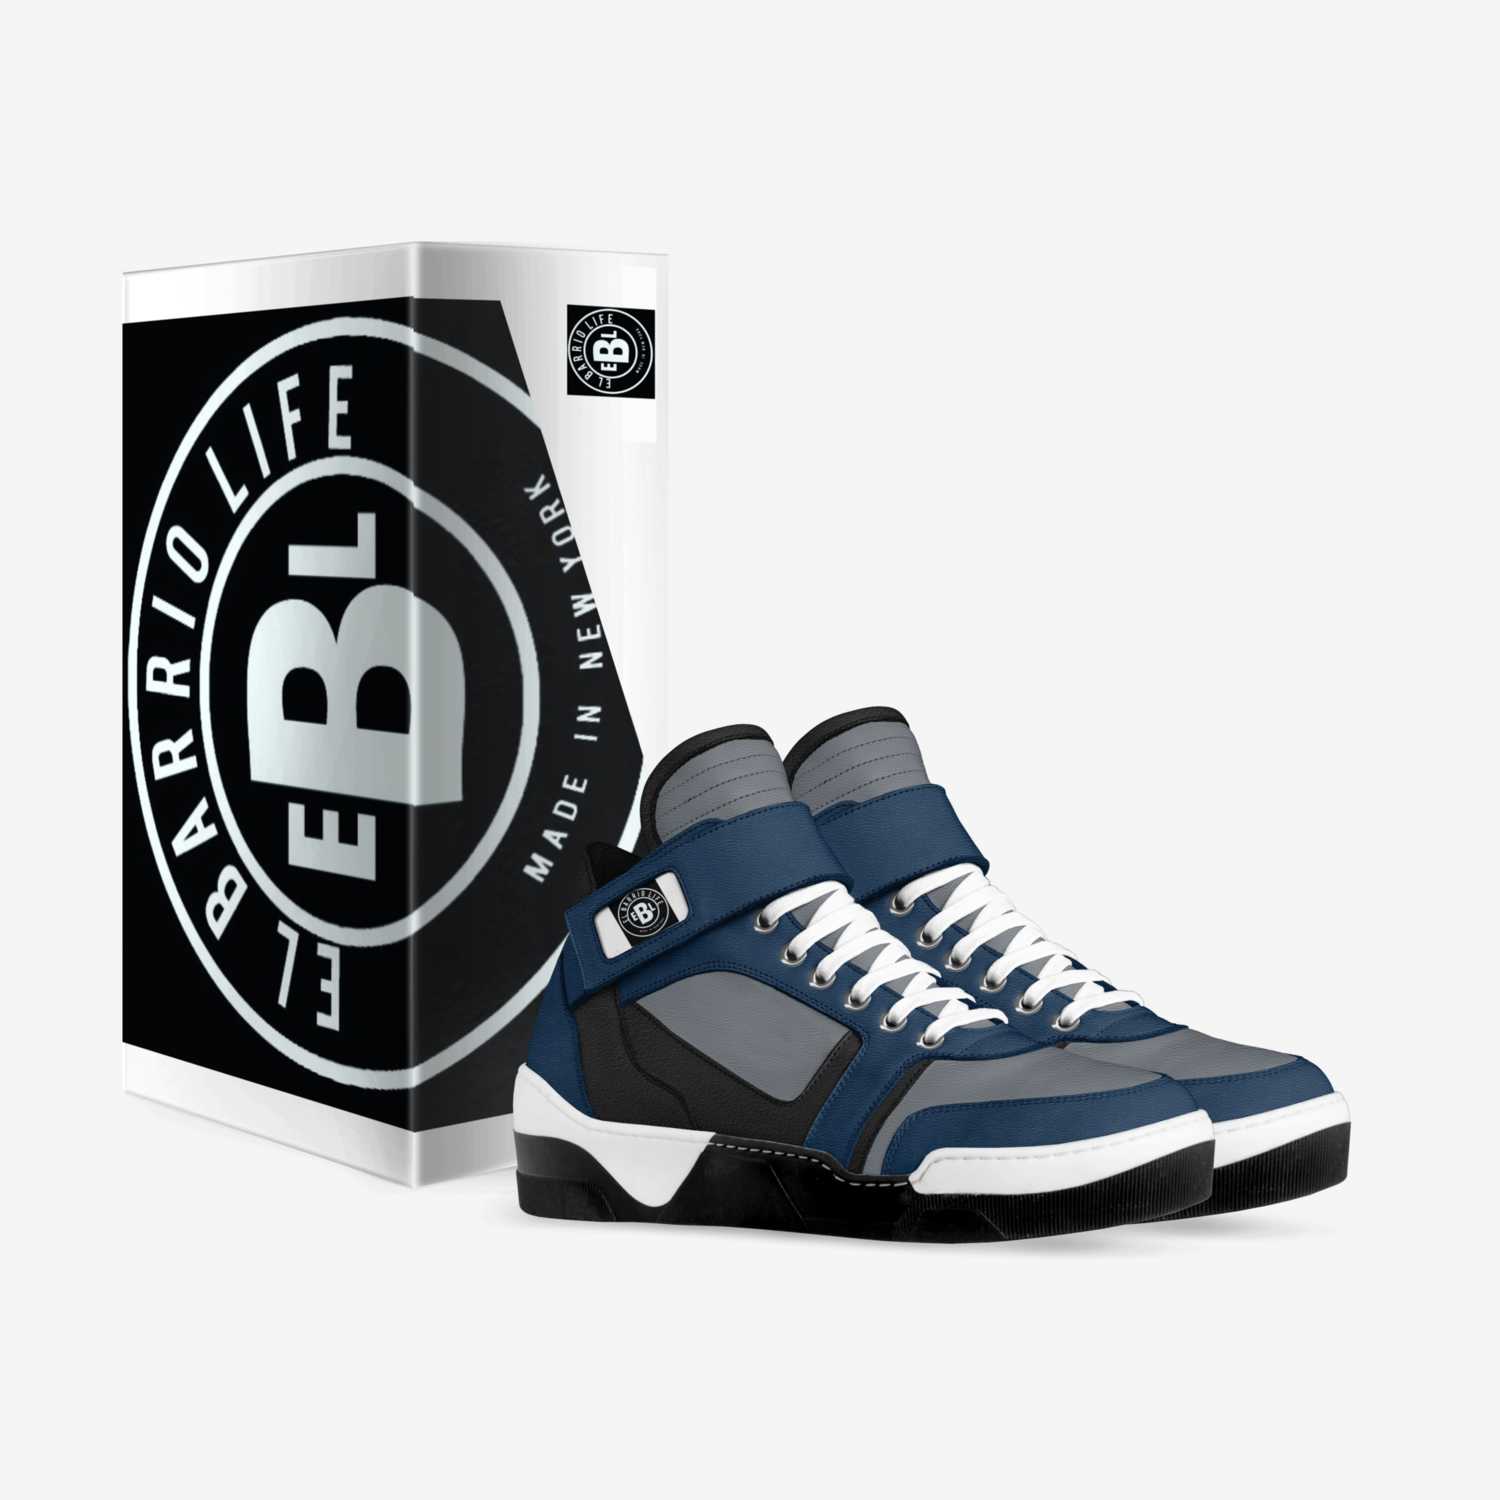 El Barrio kickz custom made in Italy shoes by Gustavo Banegas | Box view